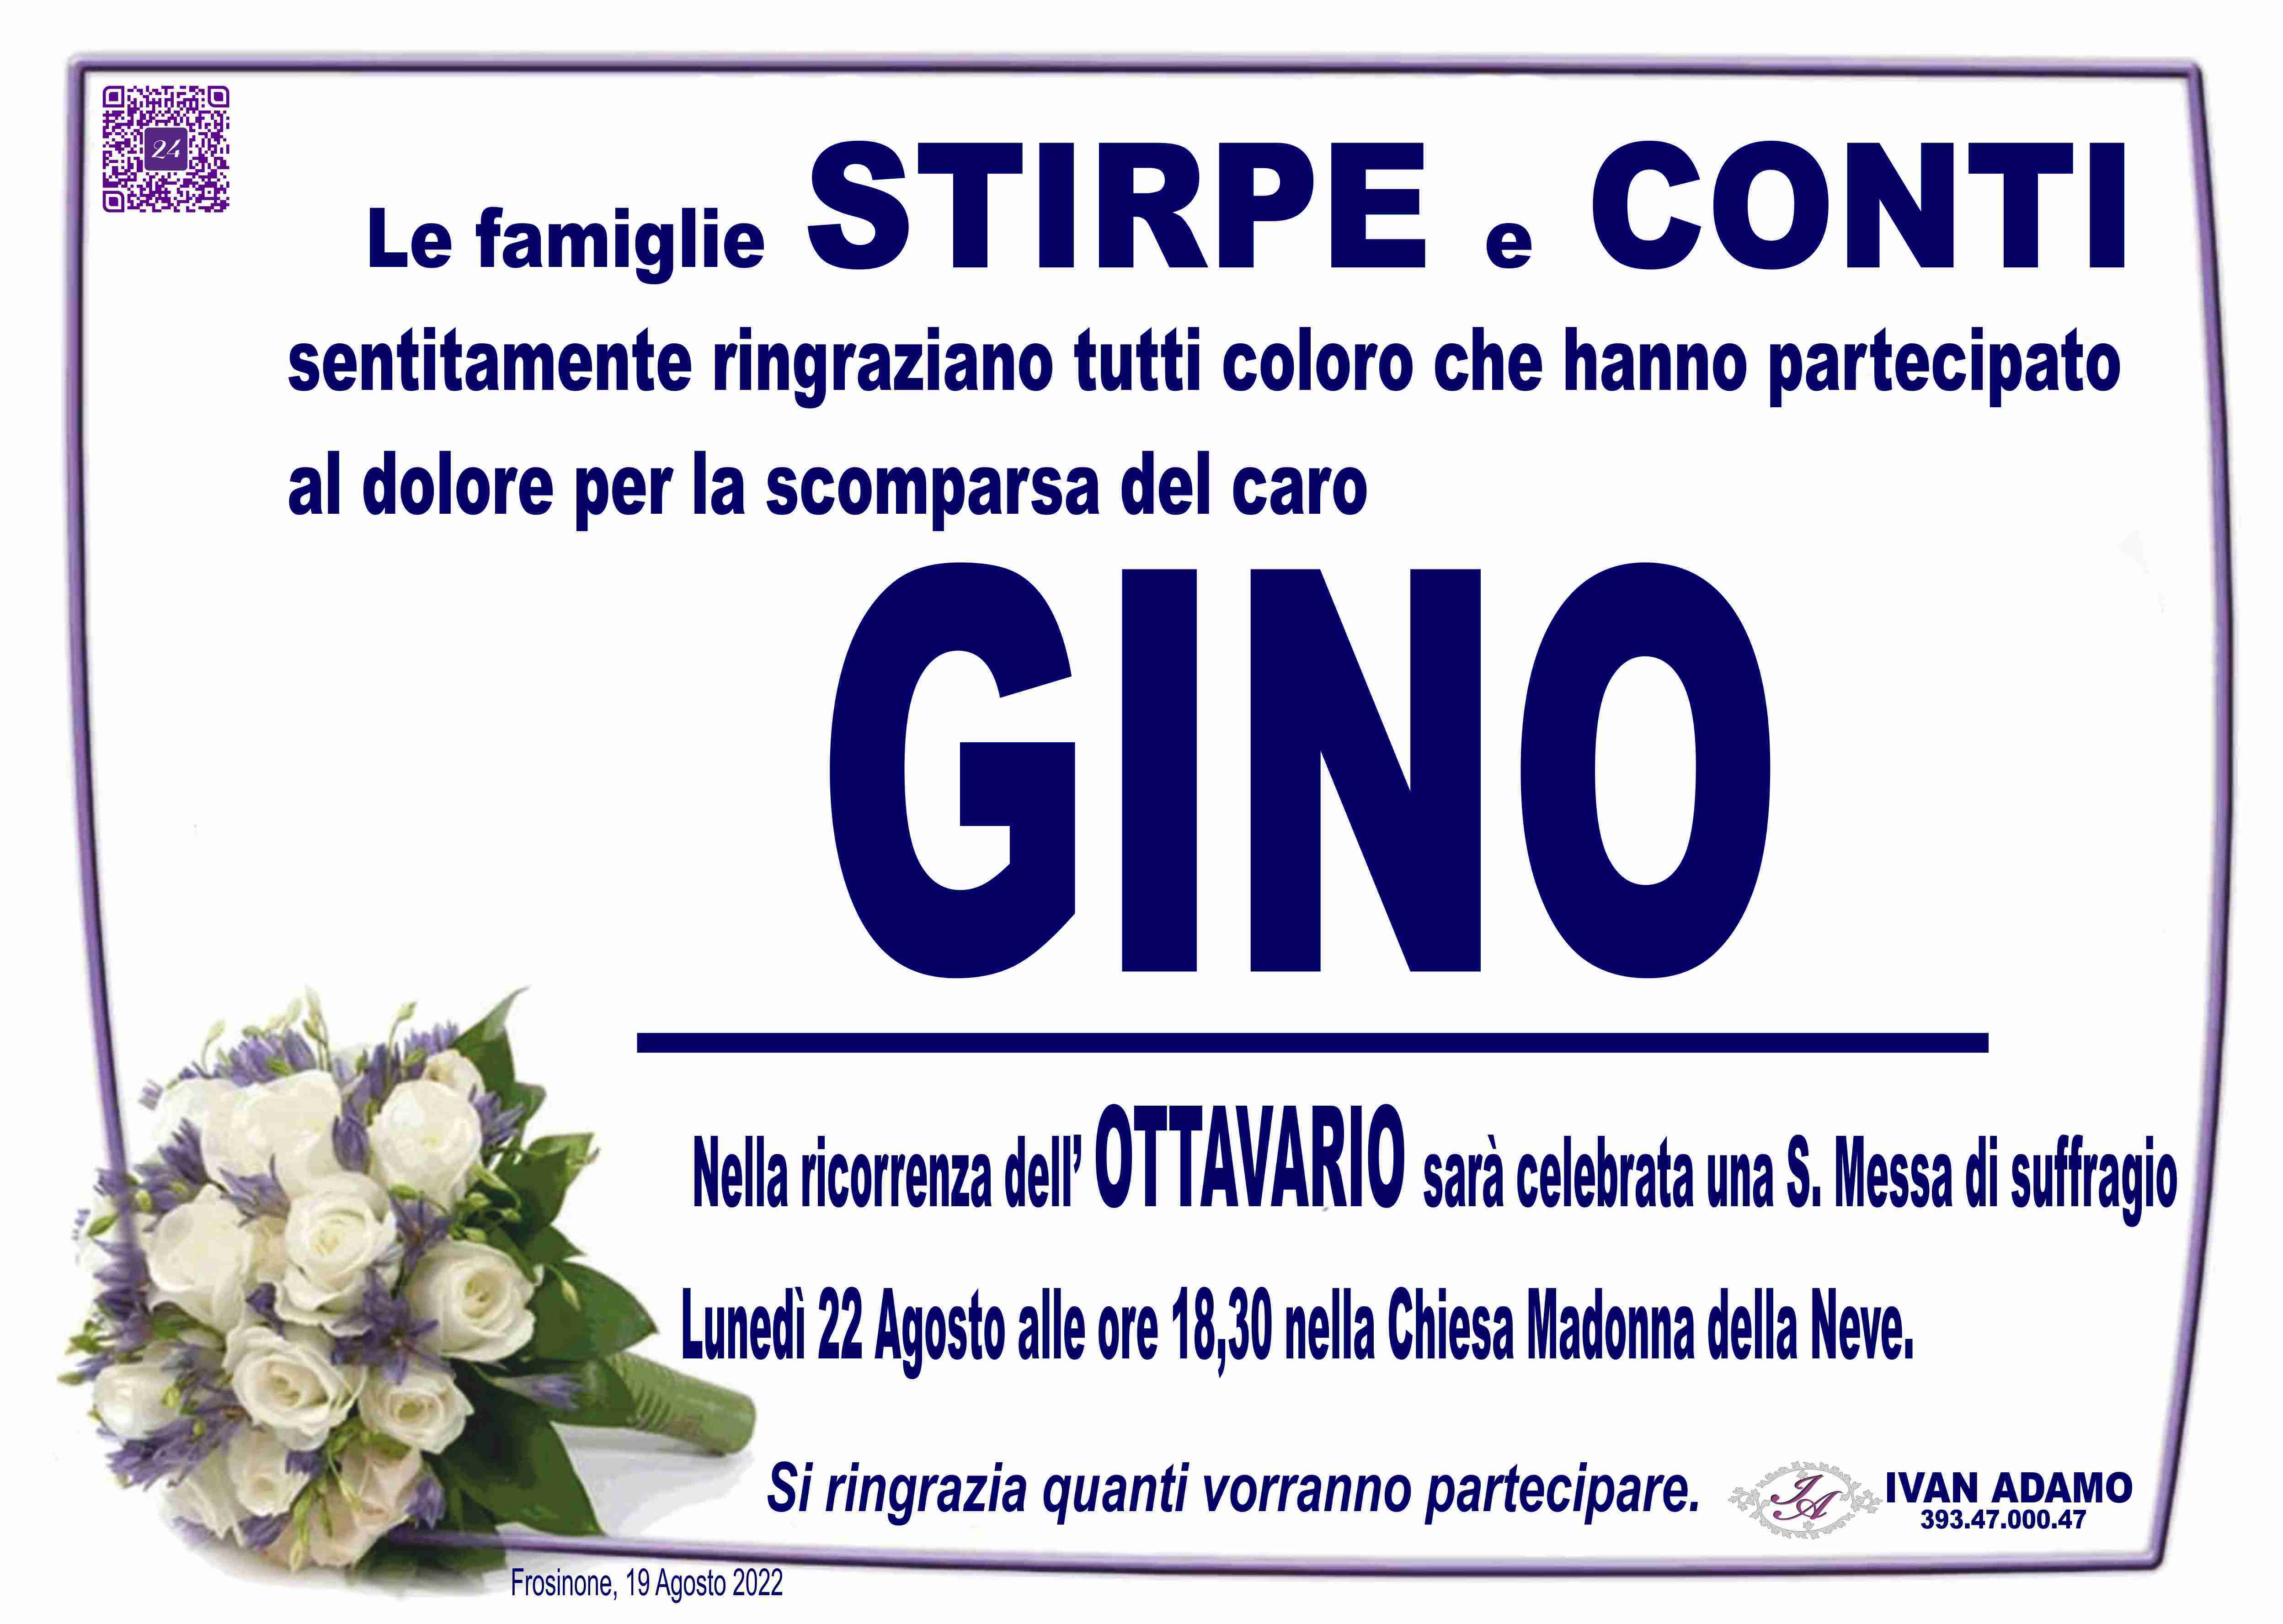 Gino Stirpe